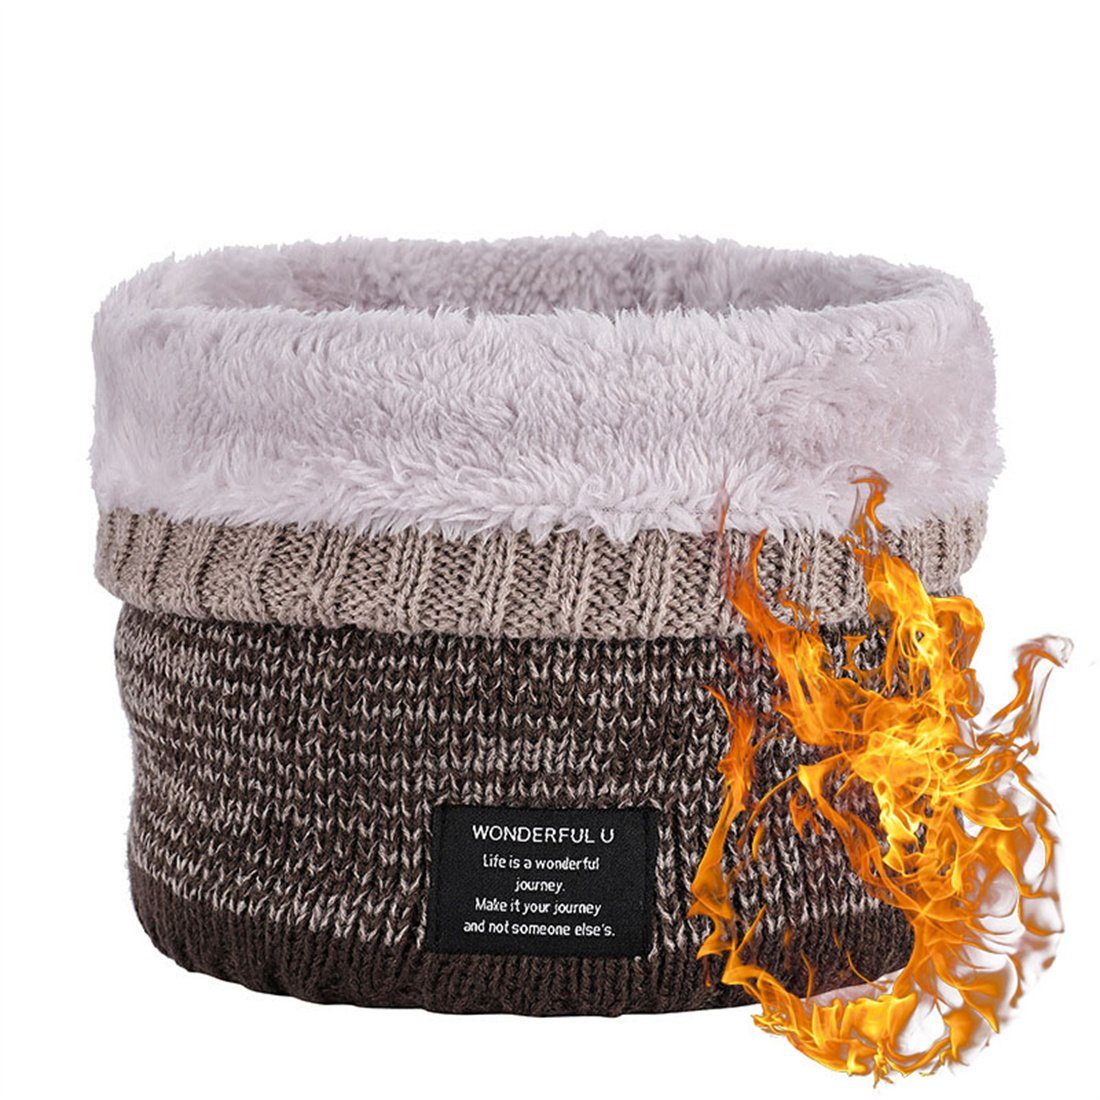 DÖRÖY Modeschal Unisex Farbverlauf warm gepolstert Schal, Winter Wolle Hals Abdeckung khaki | Modeschals